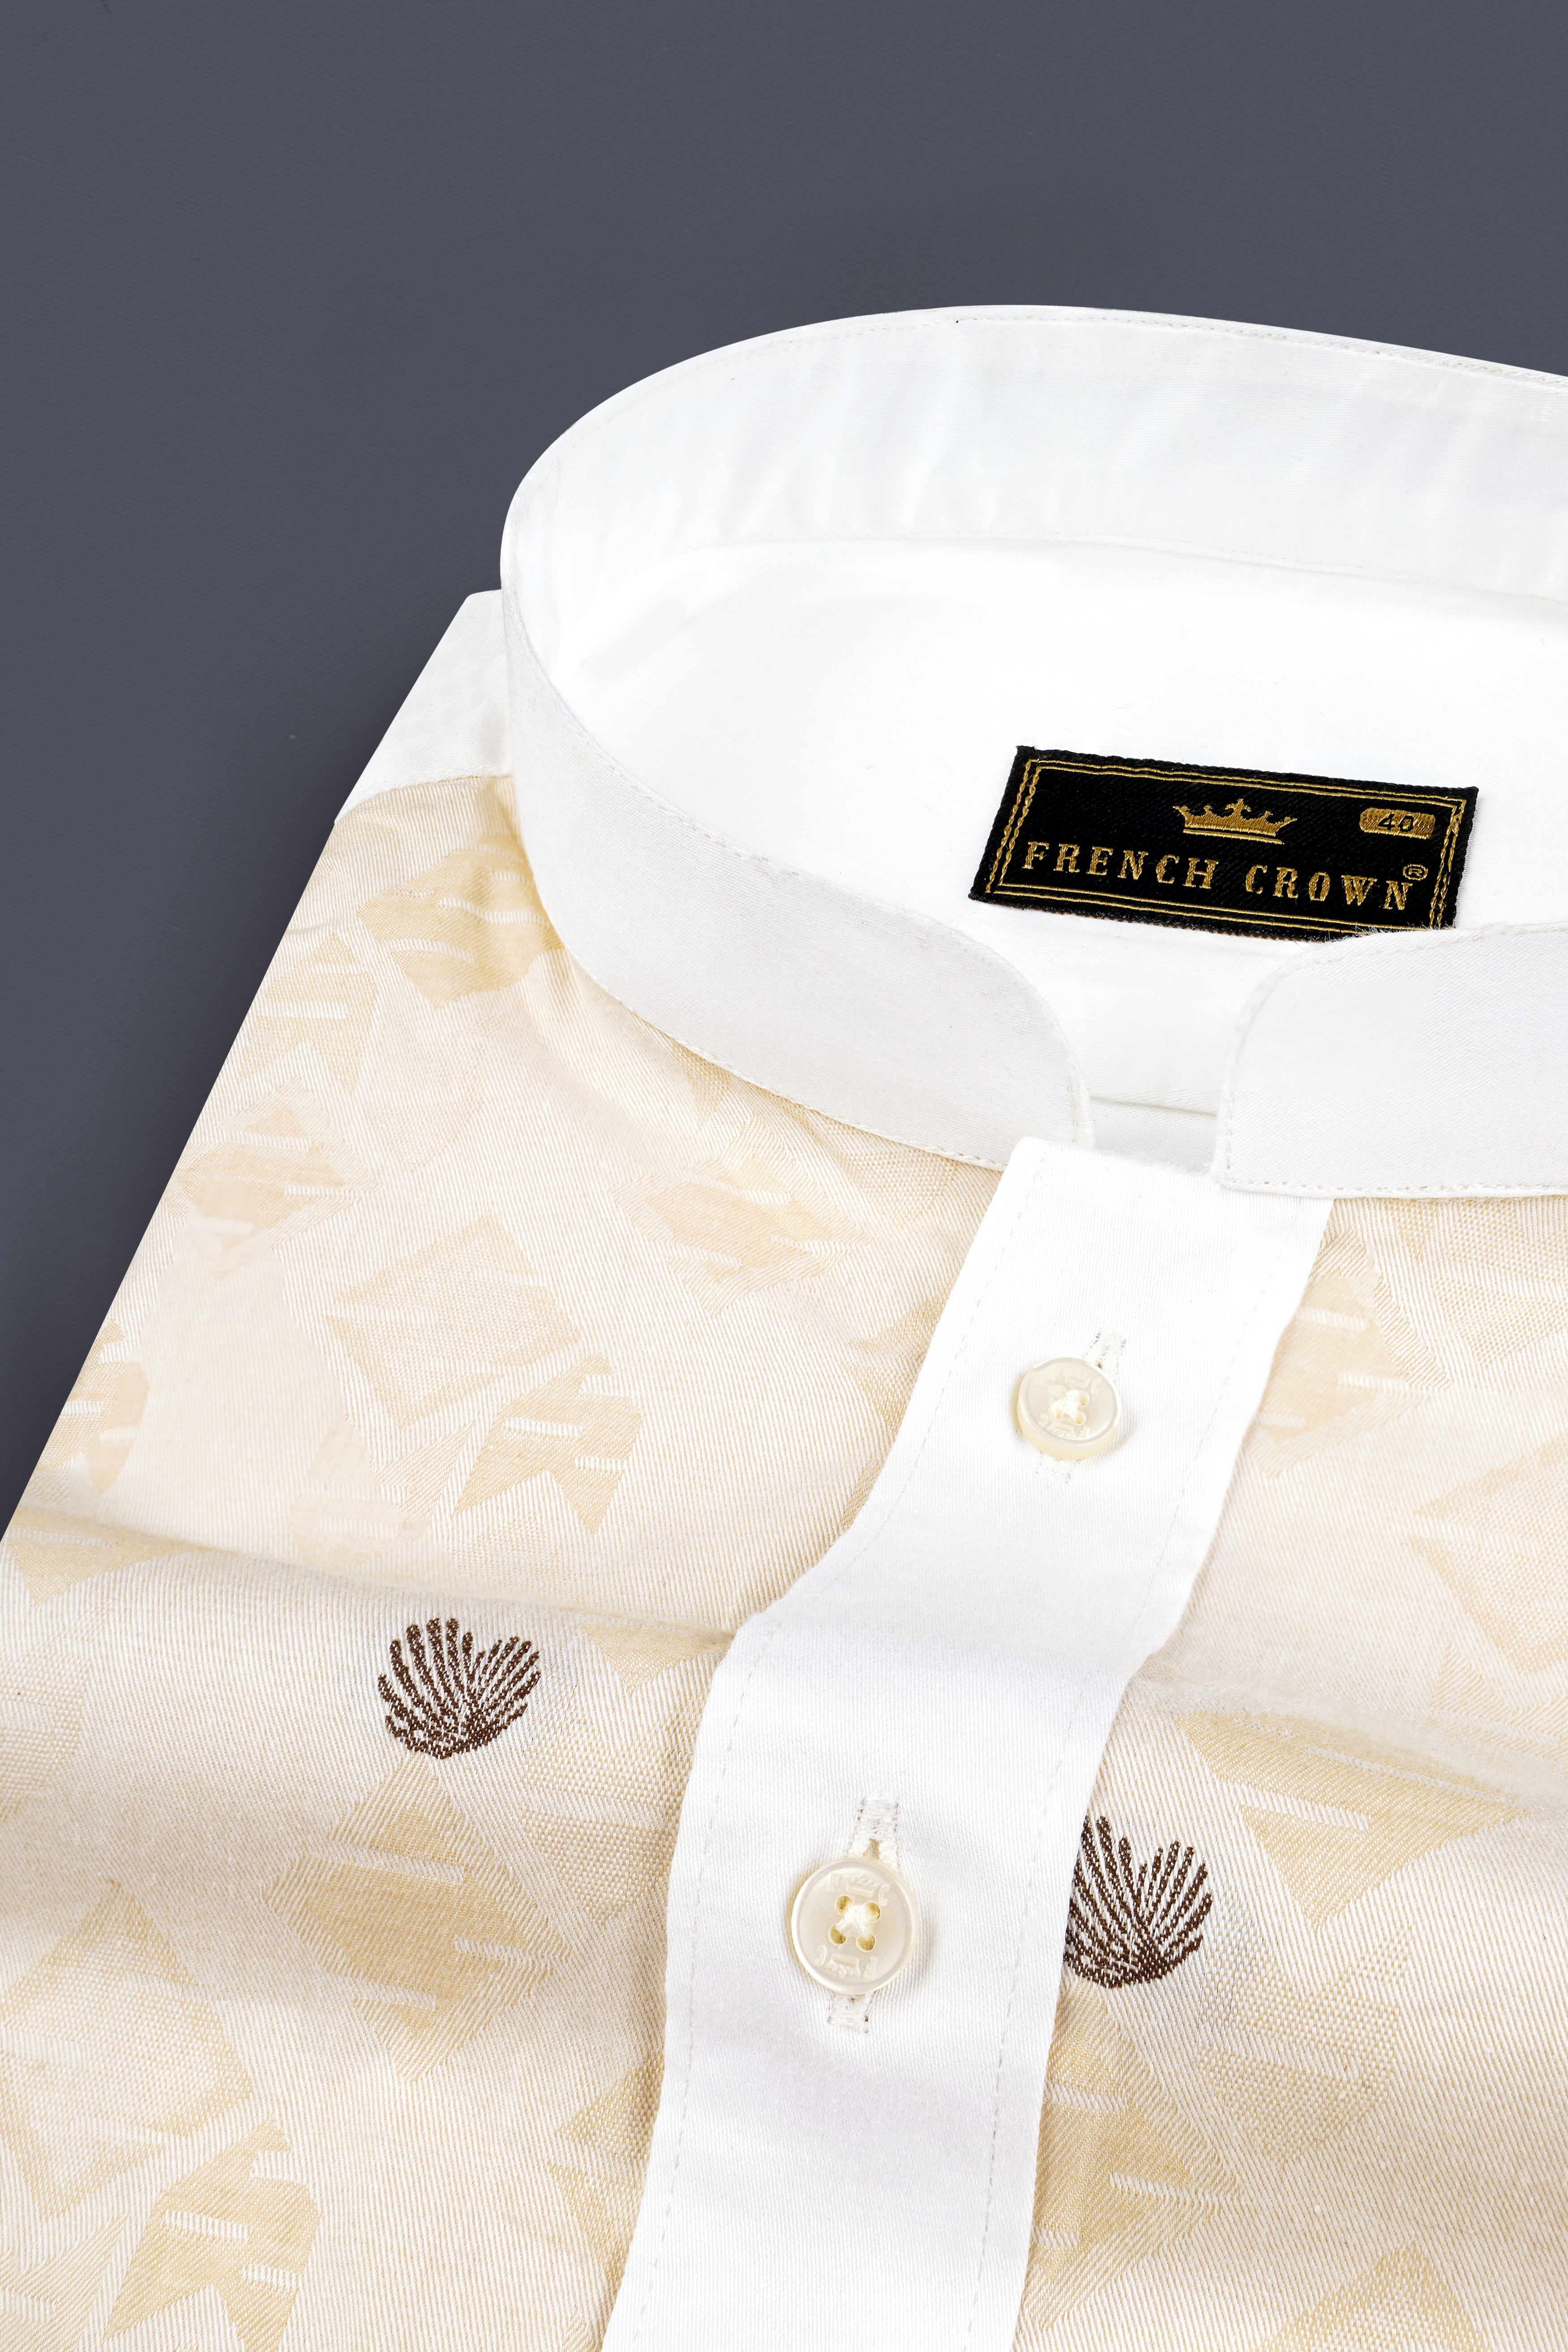 Bright White and Gin Fizz Jacquard Textured Premium Cotton Shirt